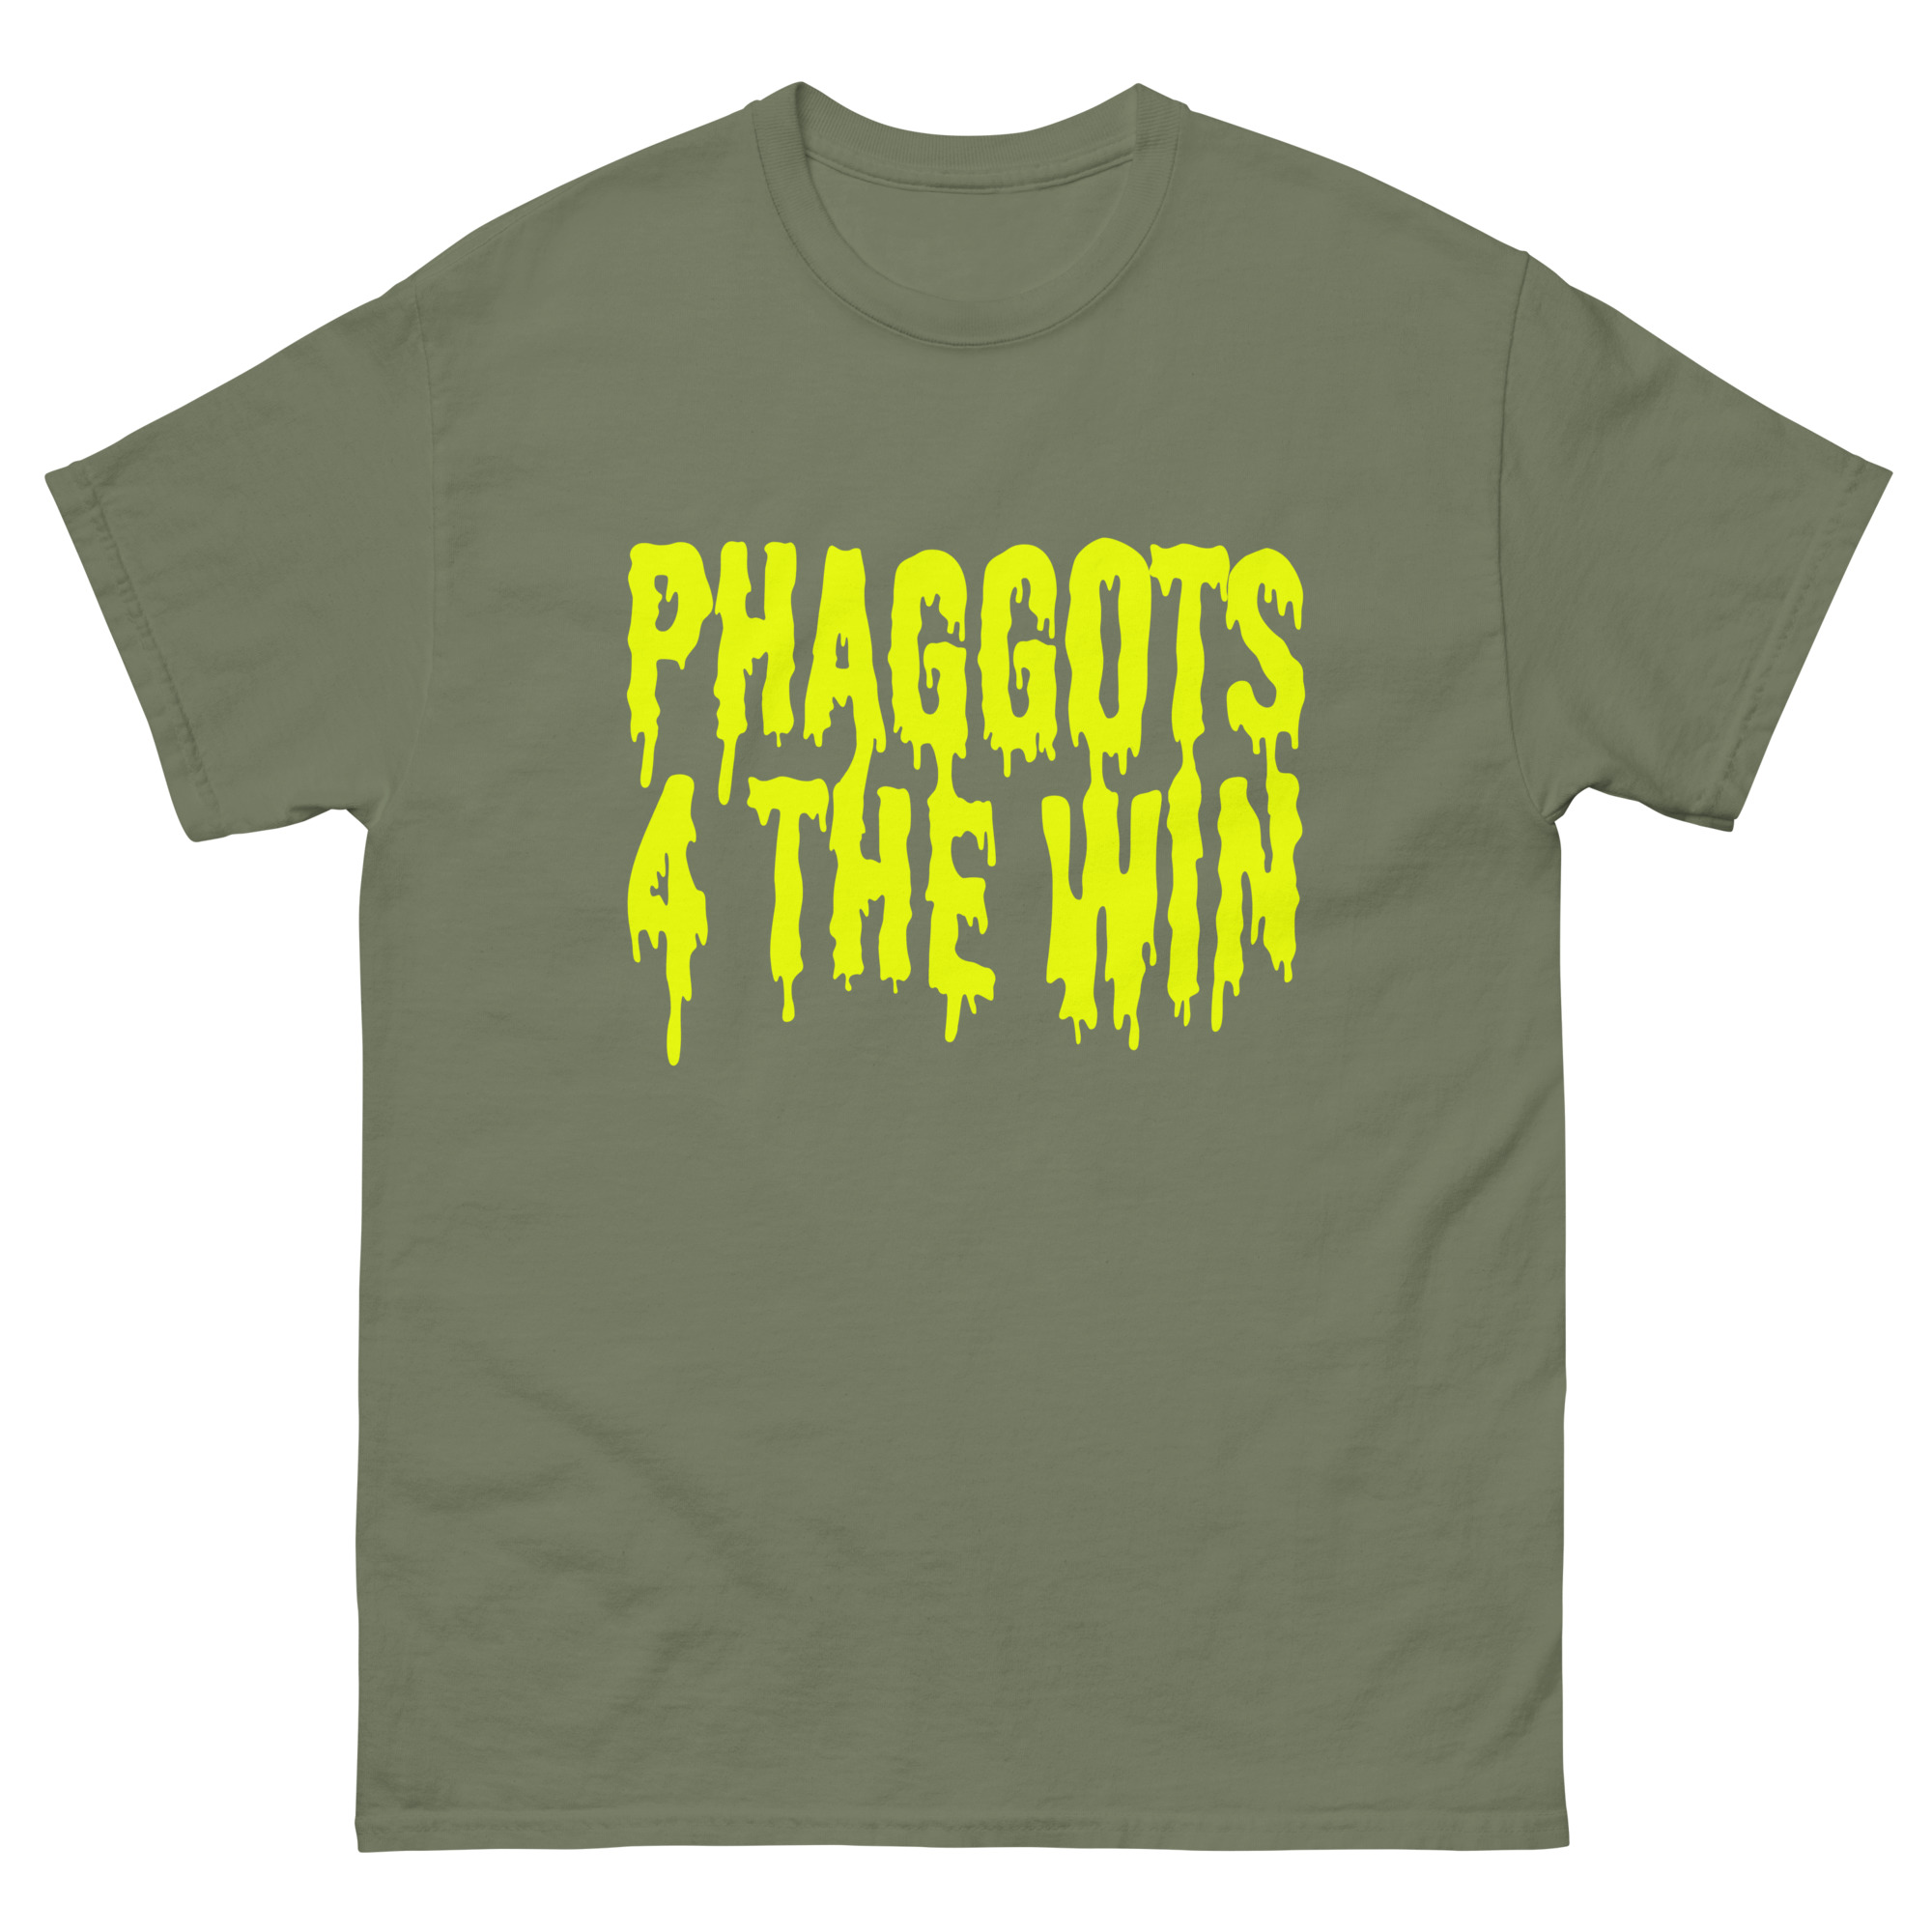 Featured image for “Phaggots 4 the Win - Men's classic Gildan tee”